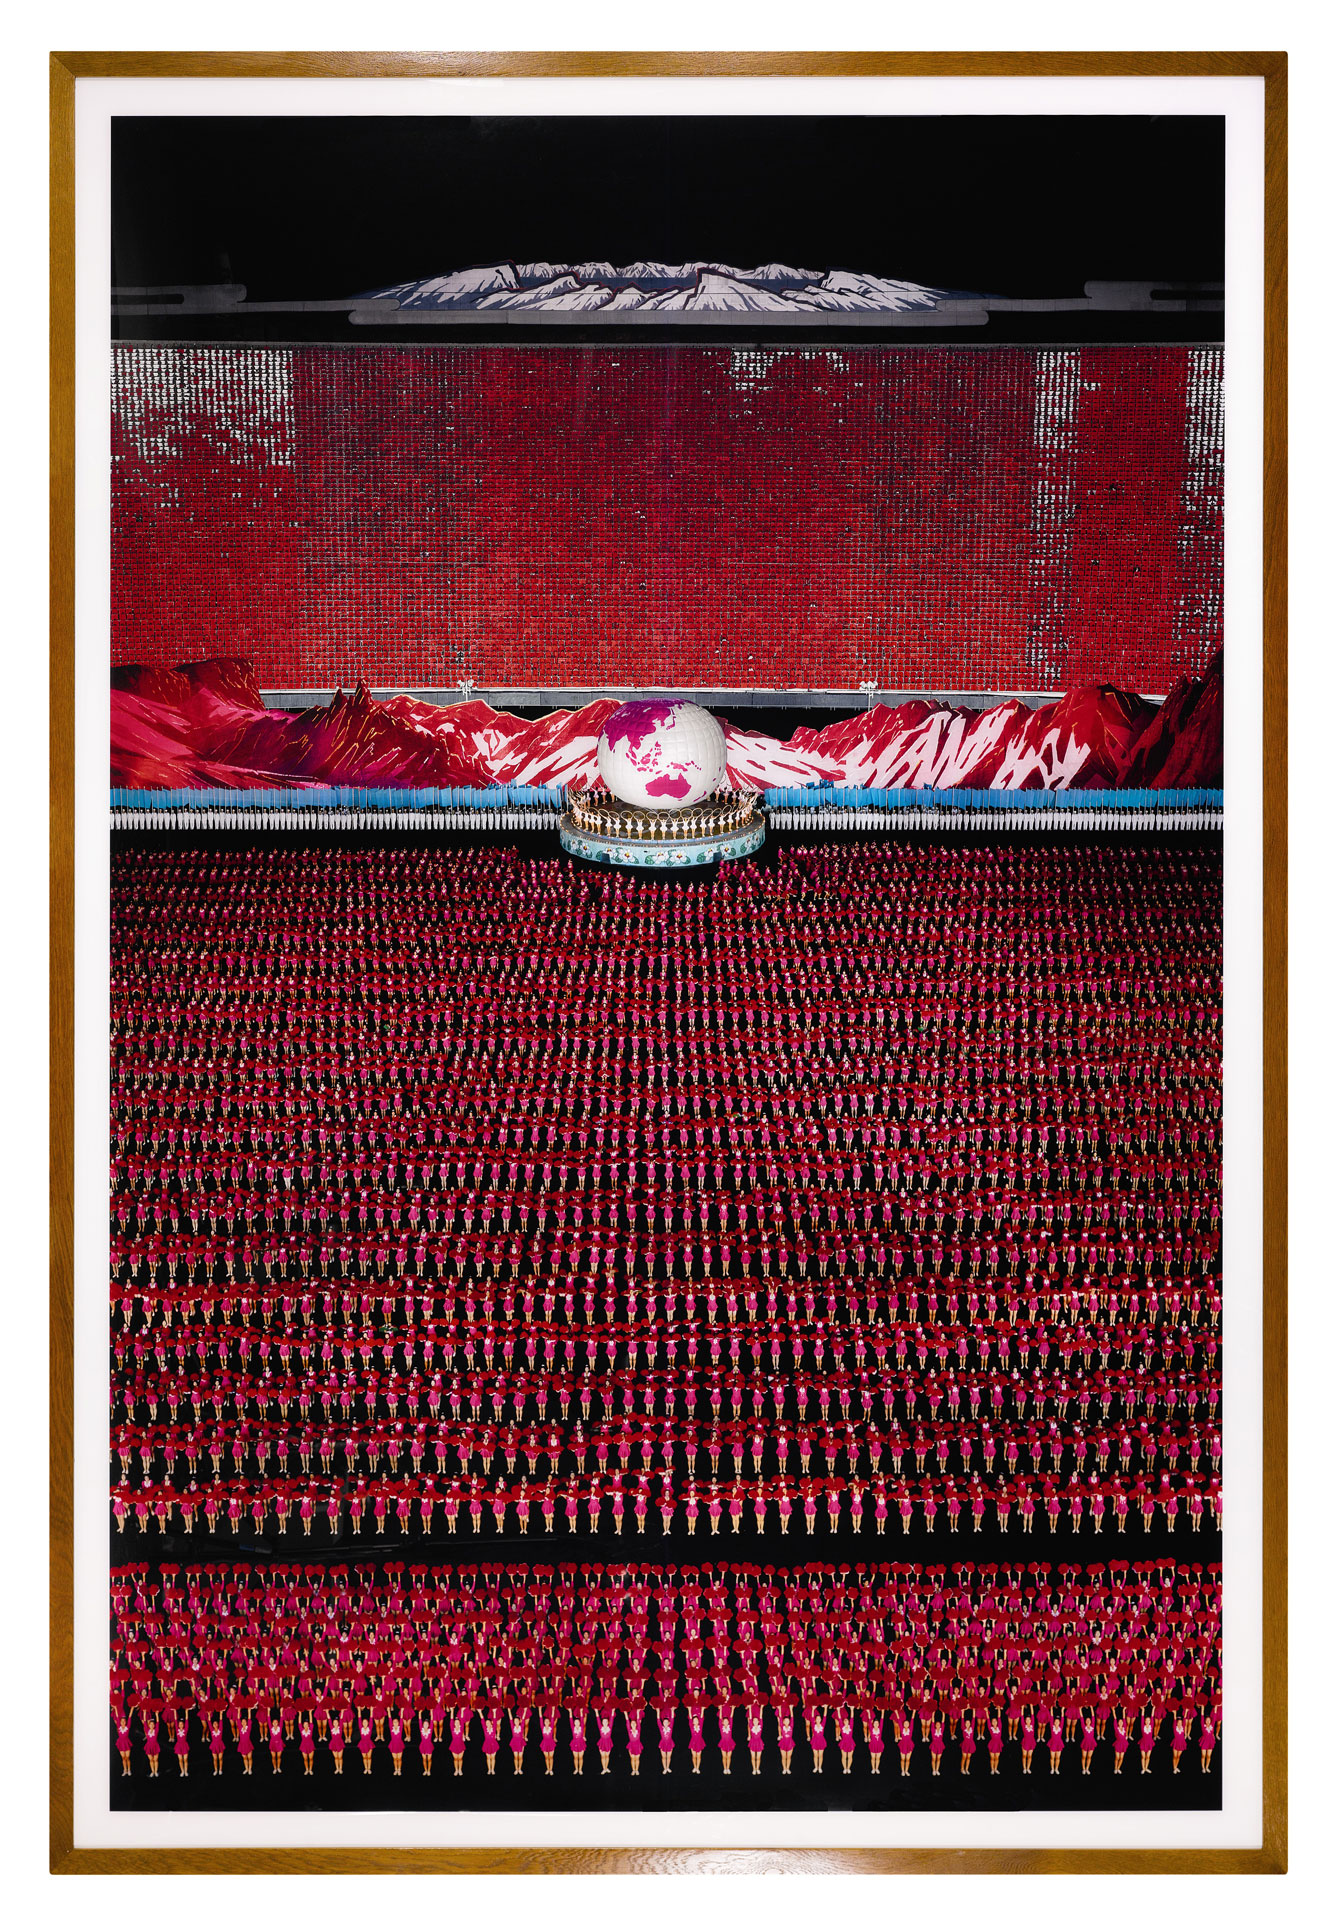 Andreas Gursky - Pyongyang IV, 2007, cibachrome print